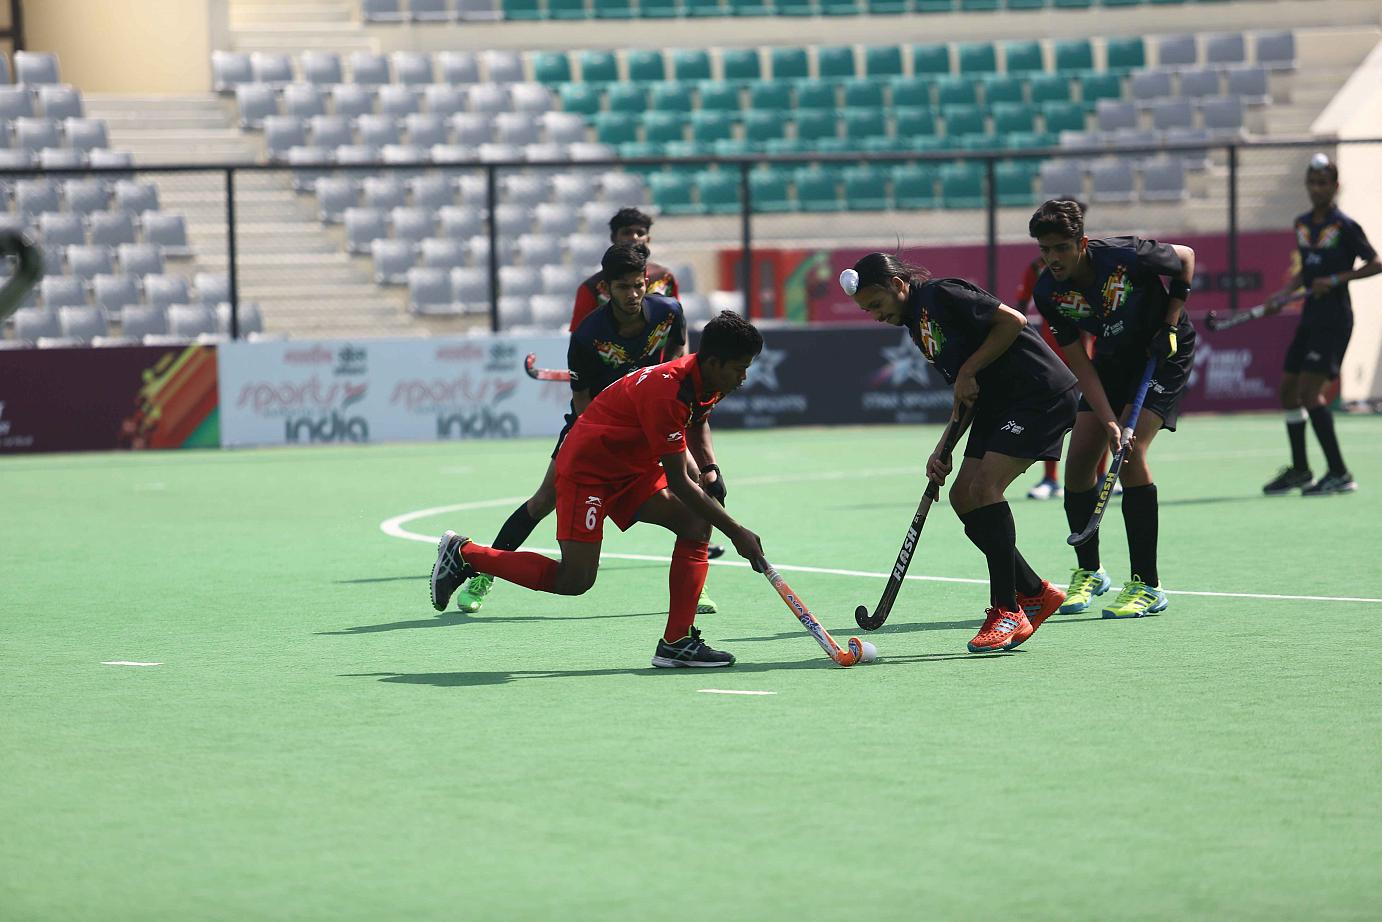 Punjab vs Odisha Boys at Khelo India School Games 2018